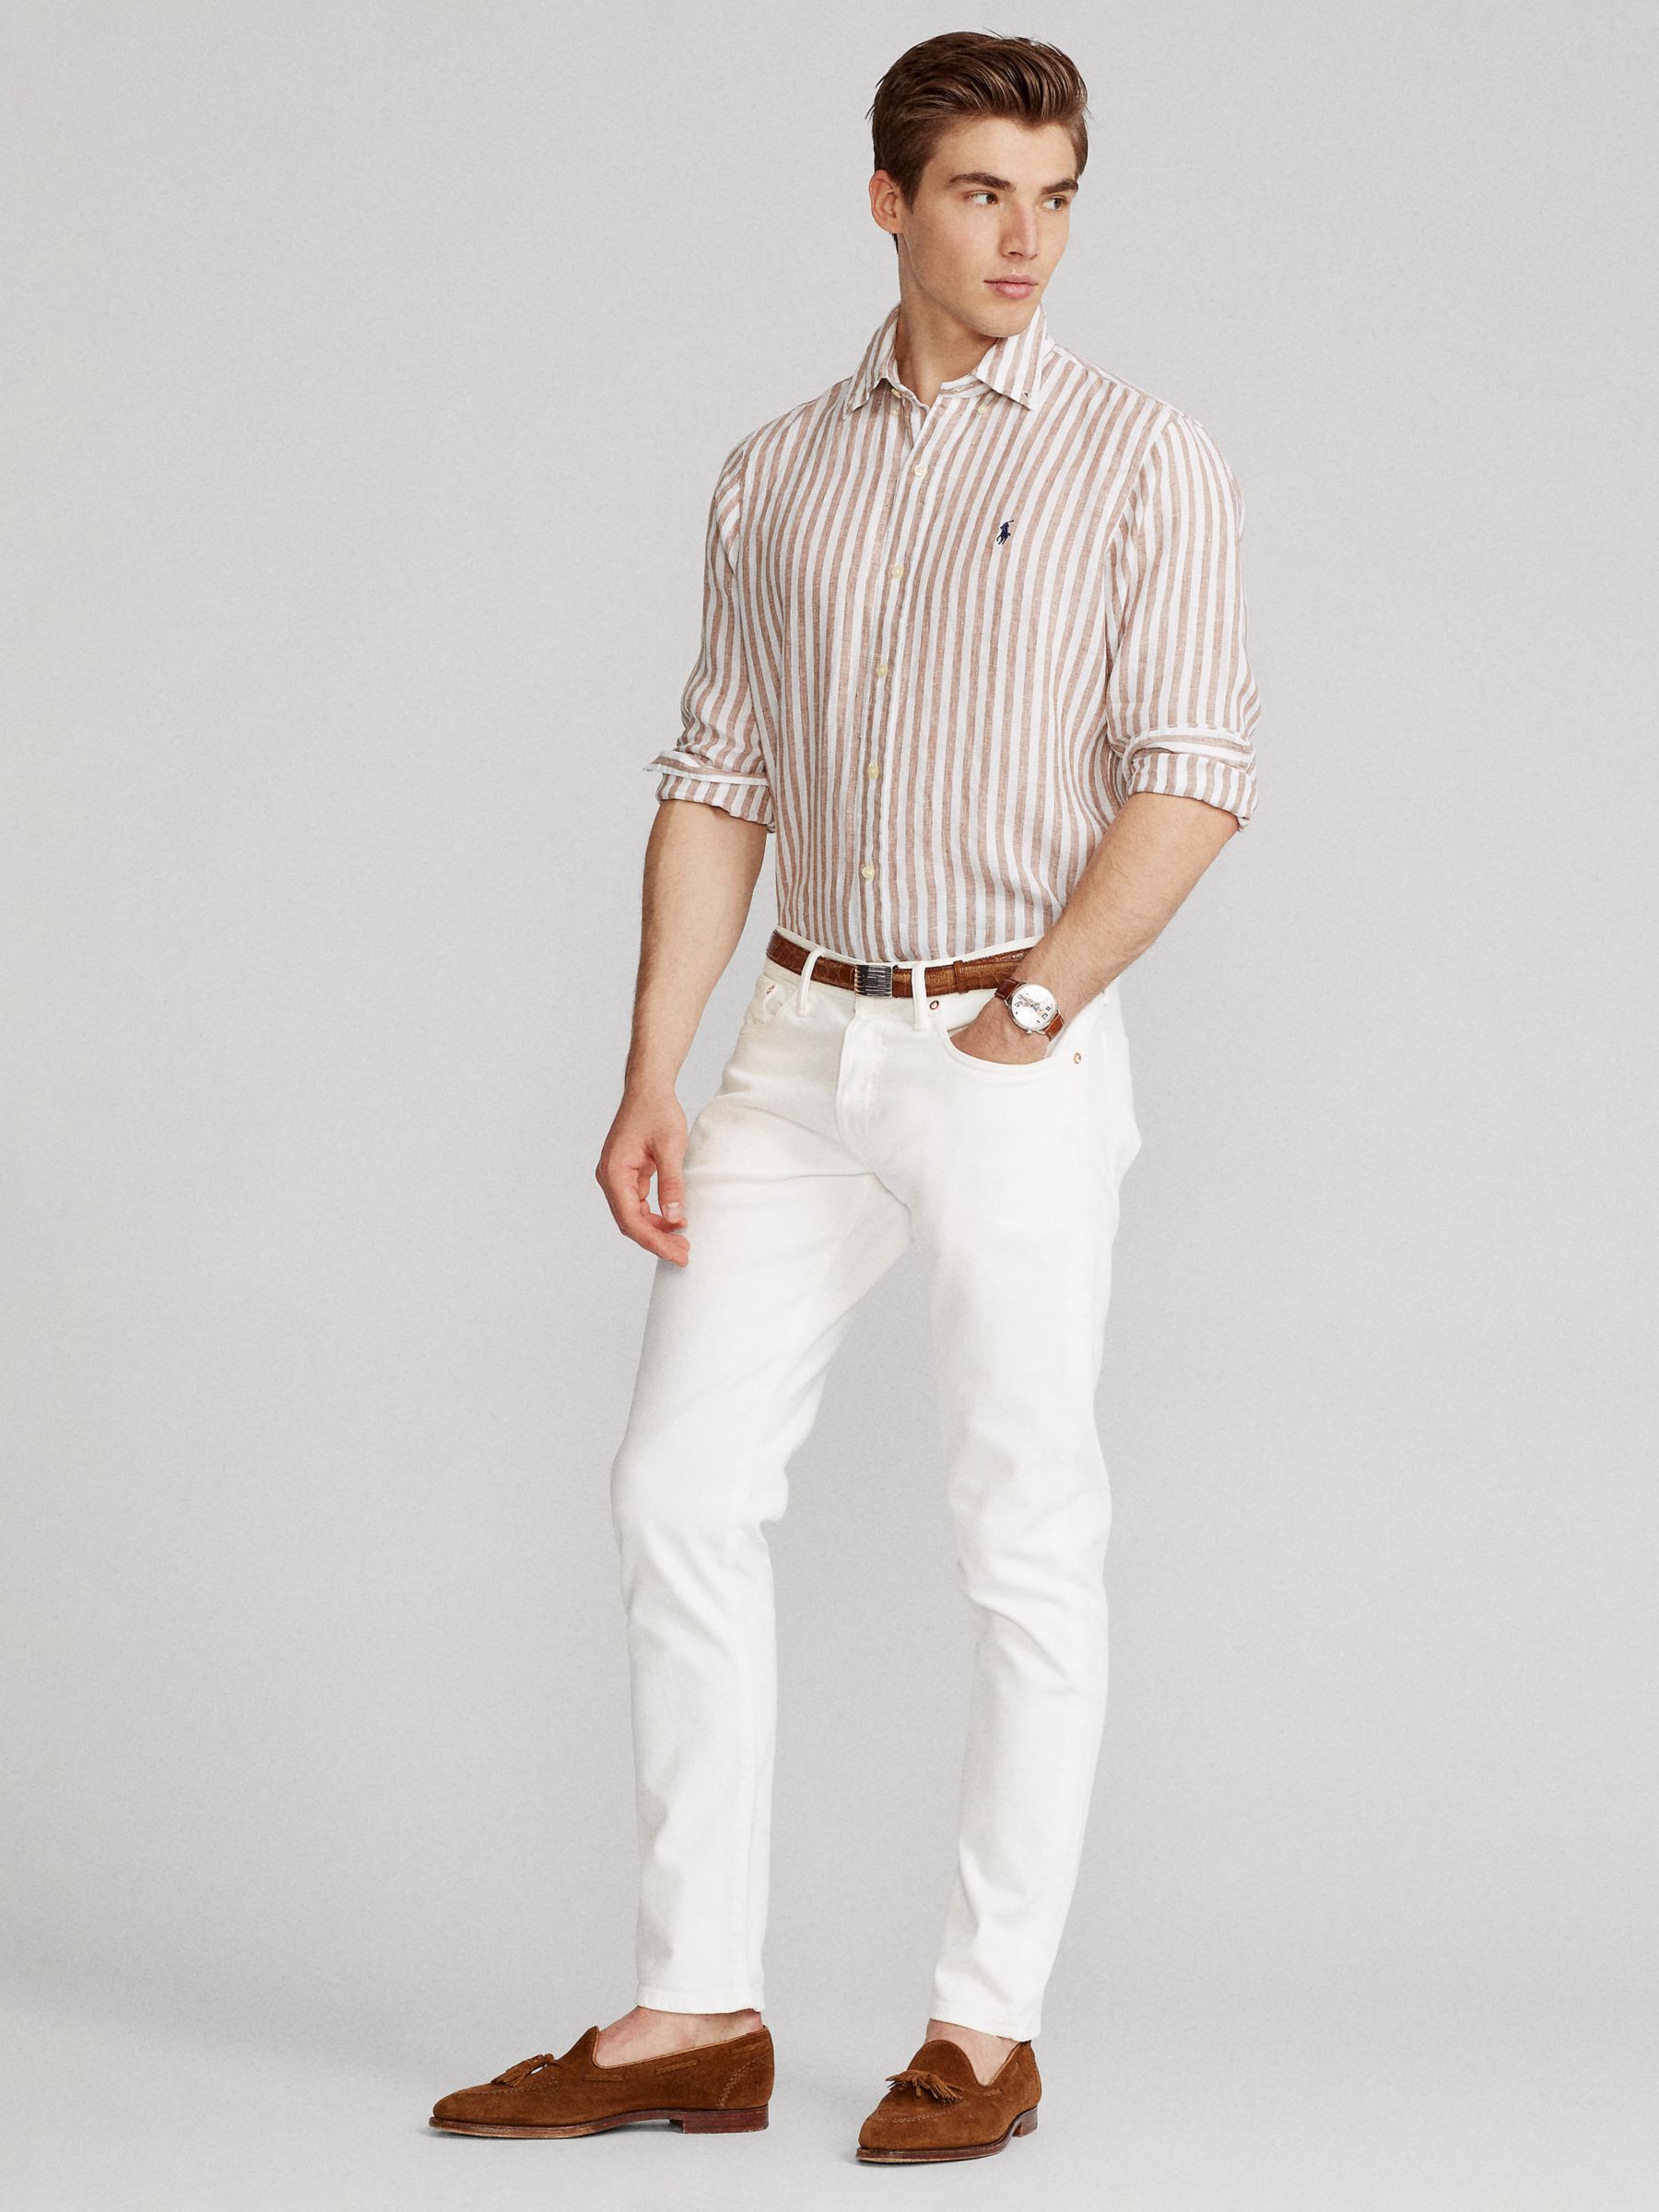 Ralph Lauren Stripe Linen Long Sleeve Shirt, Khaki/White, M